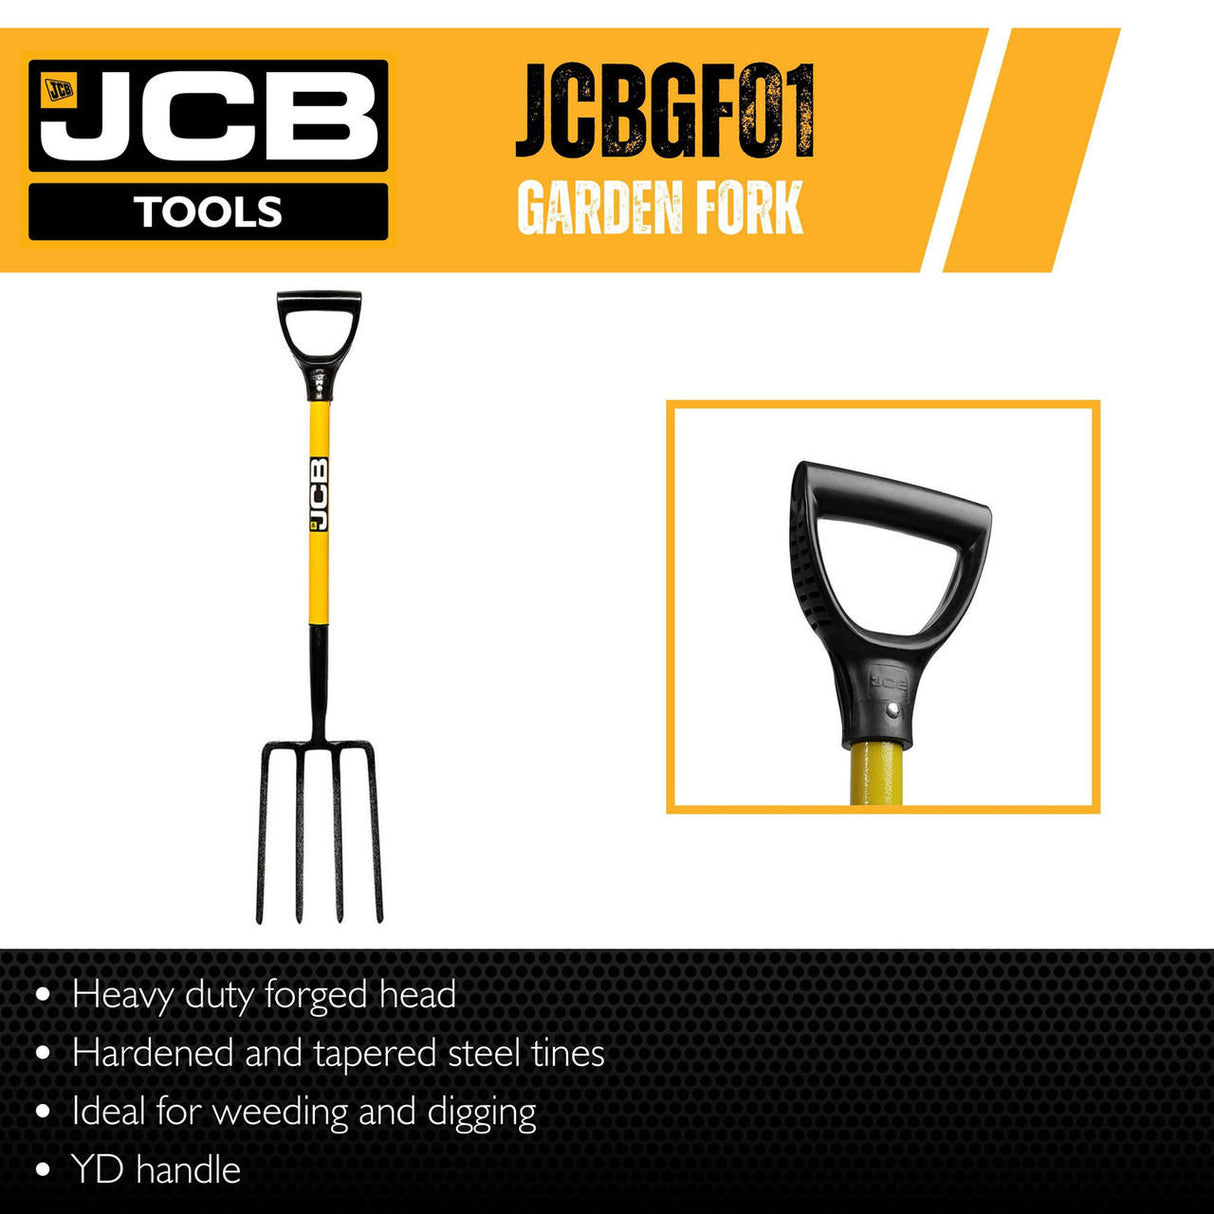 jcb tools JCB Professional Garden Fork | JCBGF01